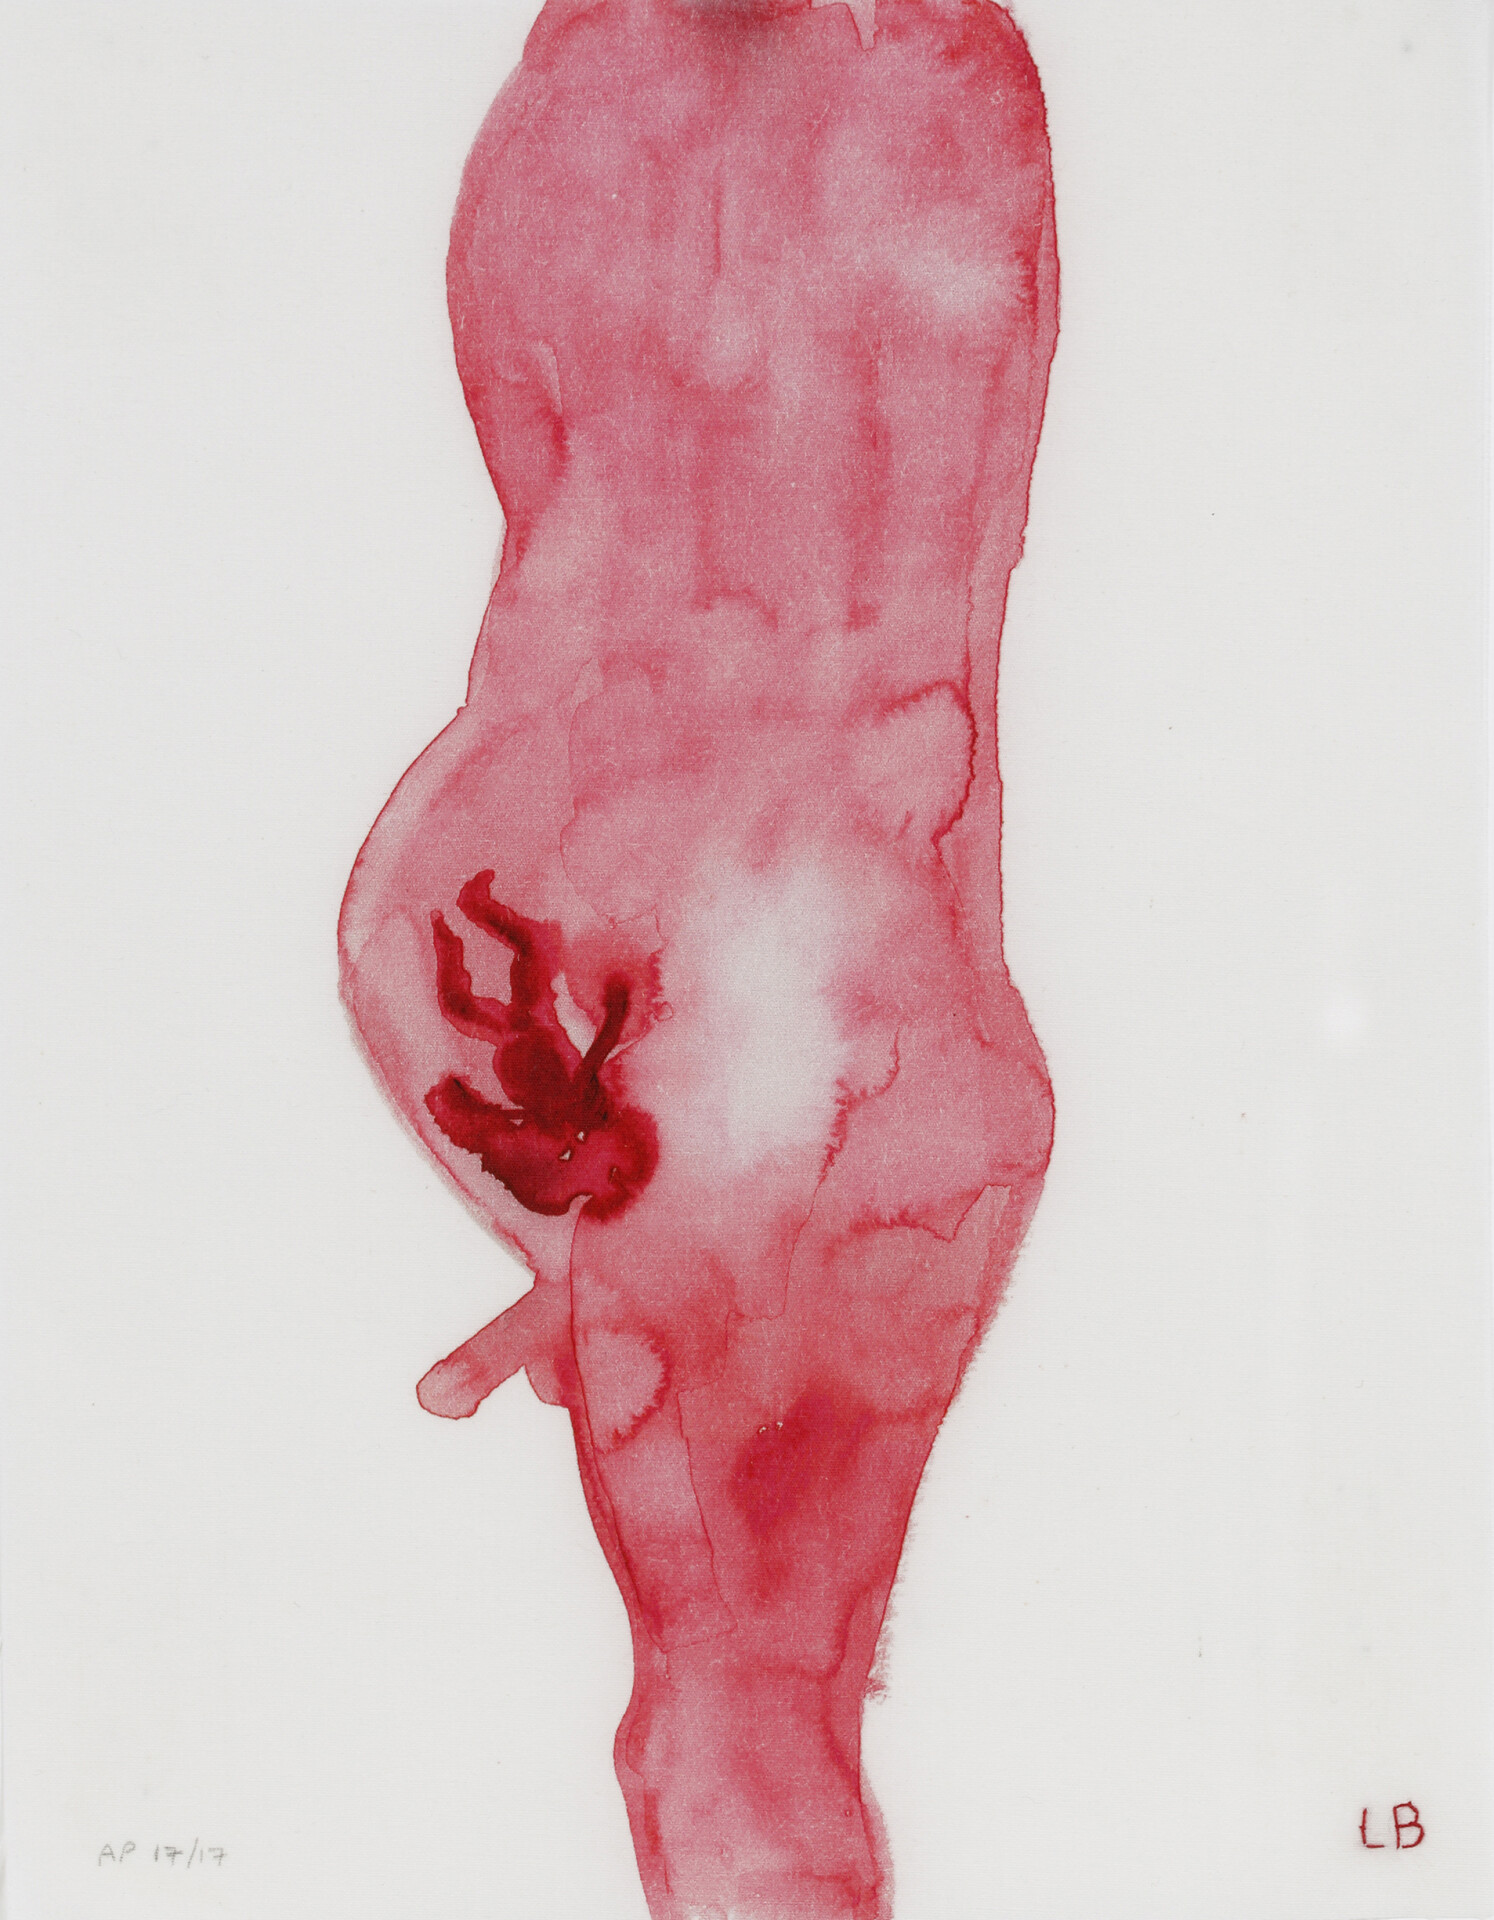 Louise Bourgeois, The Maternal Man, digital print, digital print, edition of 33, 26.4 x 20.4 cm